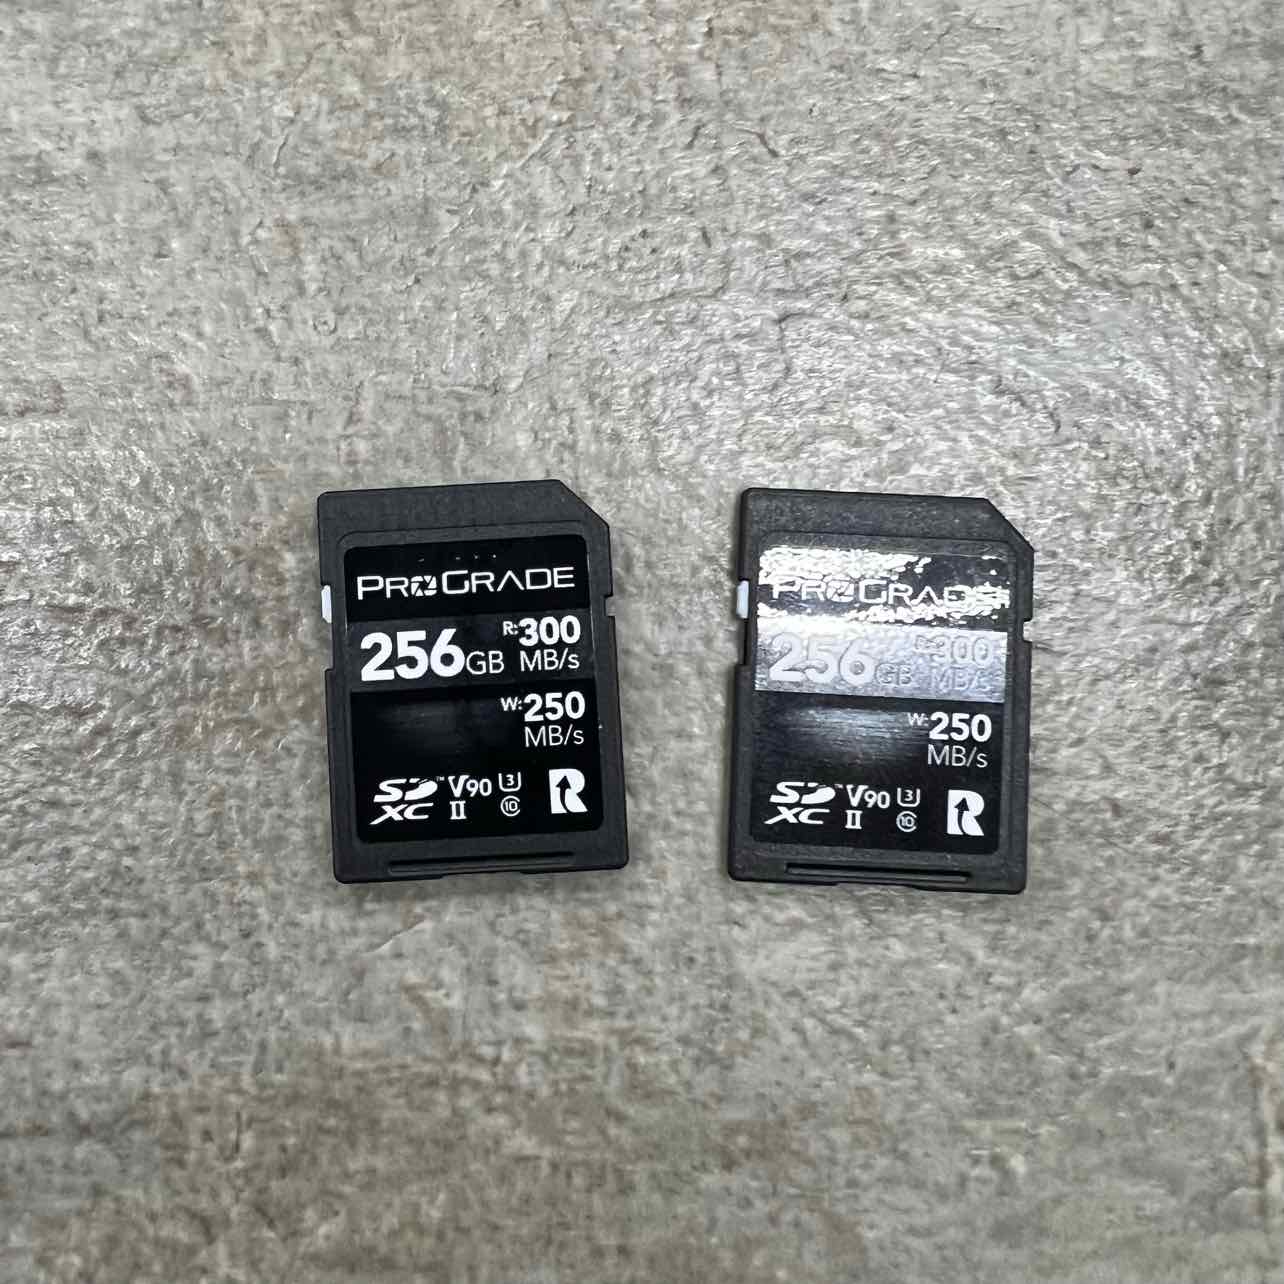 Sony Camera "A7R III" Used Black